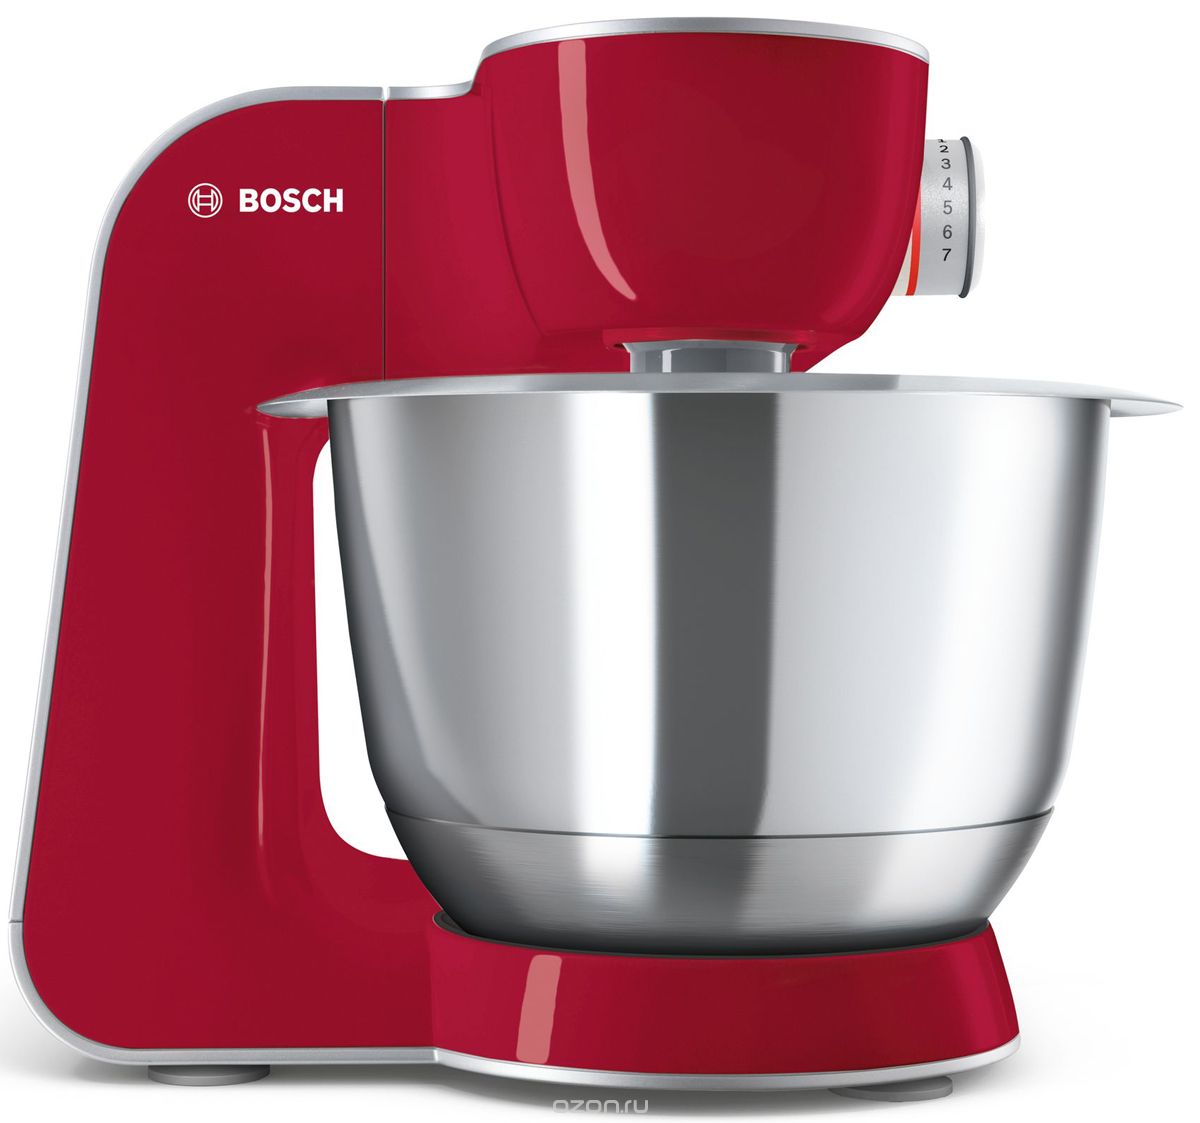   Bosch MUM58720, Red Silver